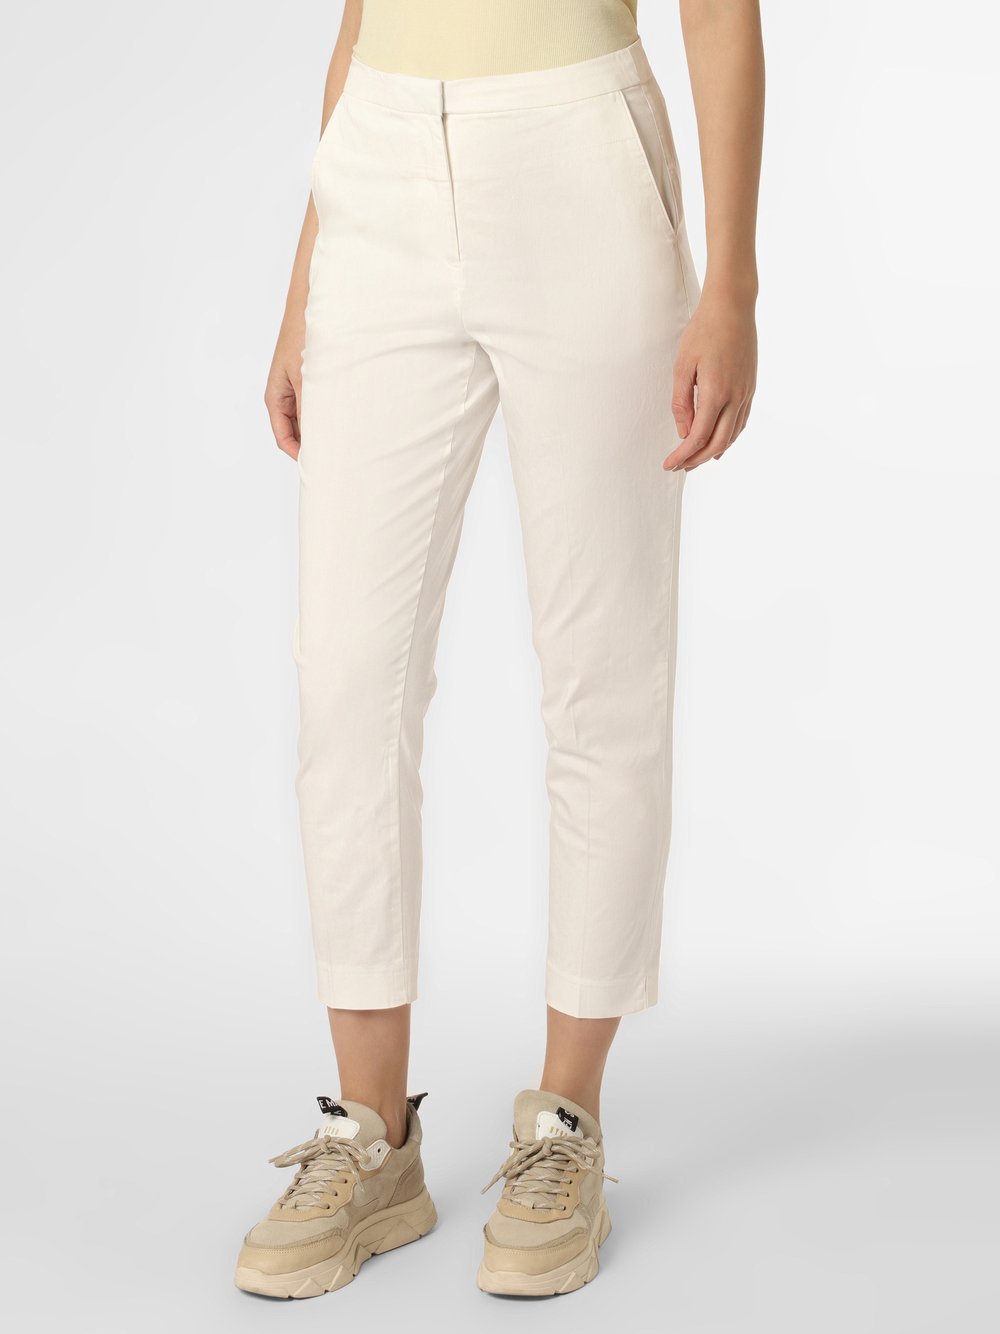 Esprit Collection - Spodnie damskie, biały Esprit Collection